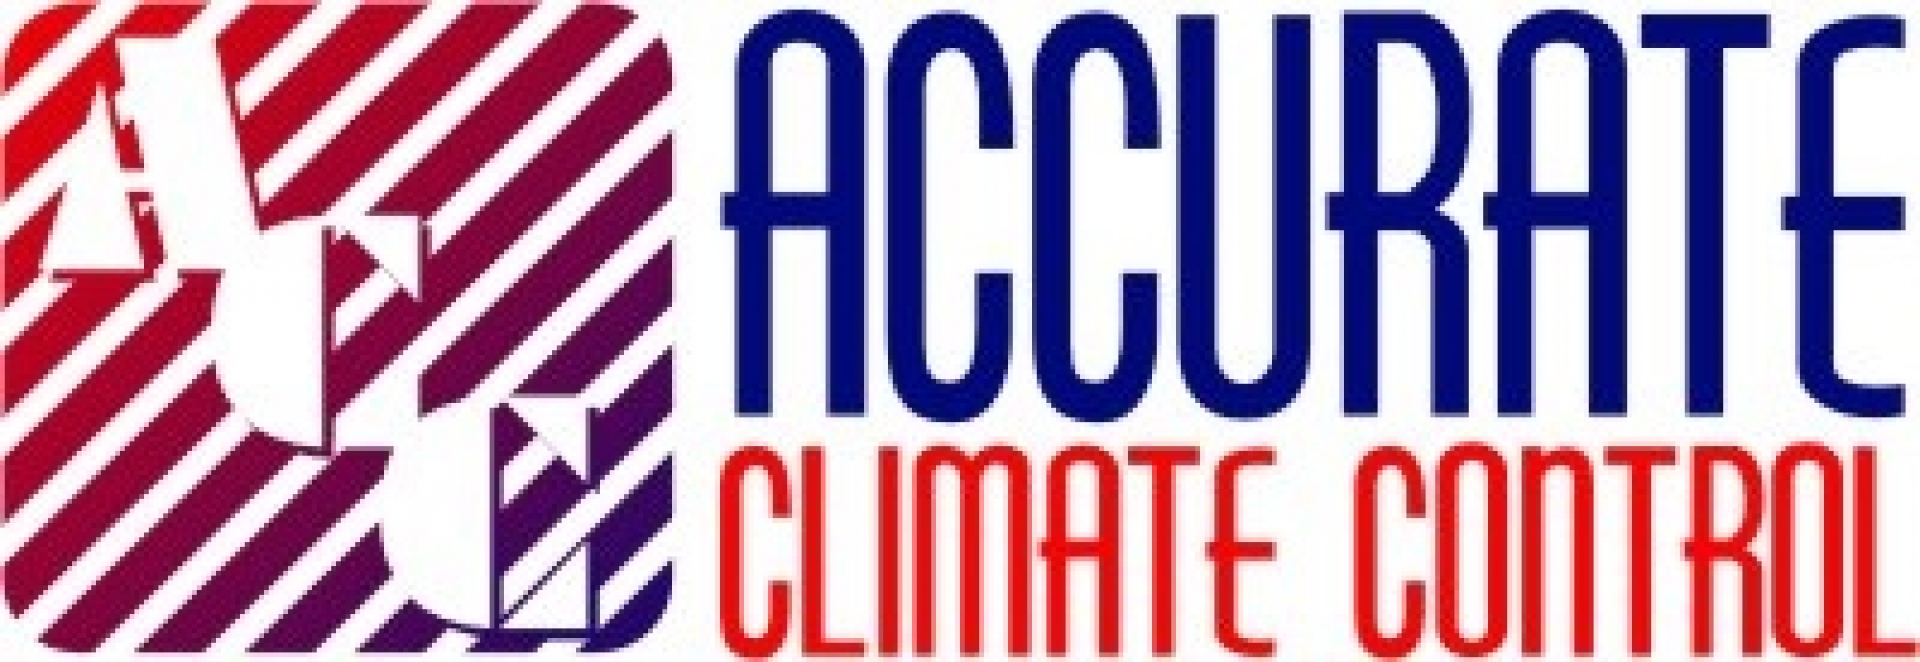 Accurate Climate Control company logo